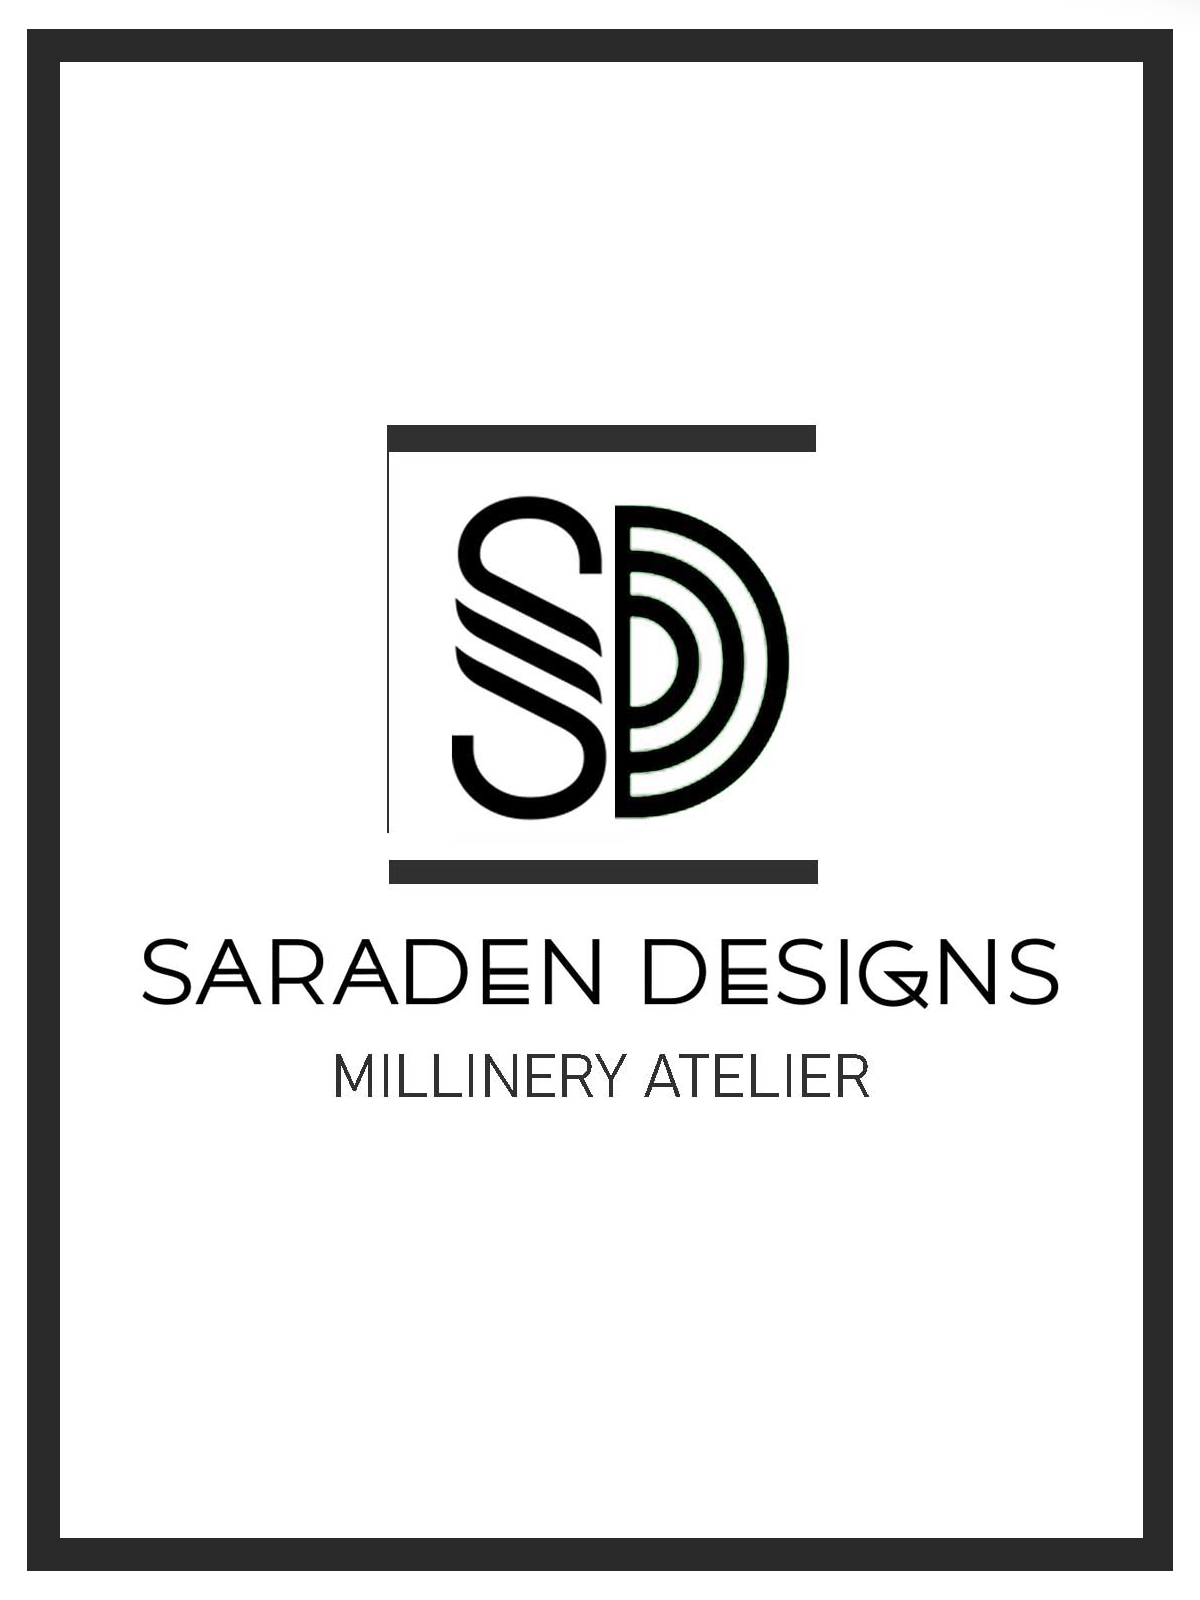 Design Ireland Now Live | Design Ireland 2021 Programme with Saraden Designs Millinery Atelier